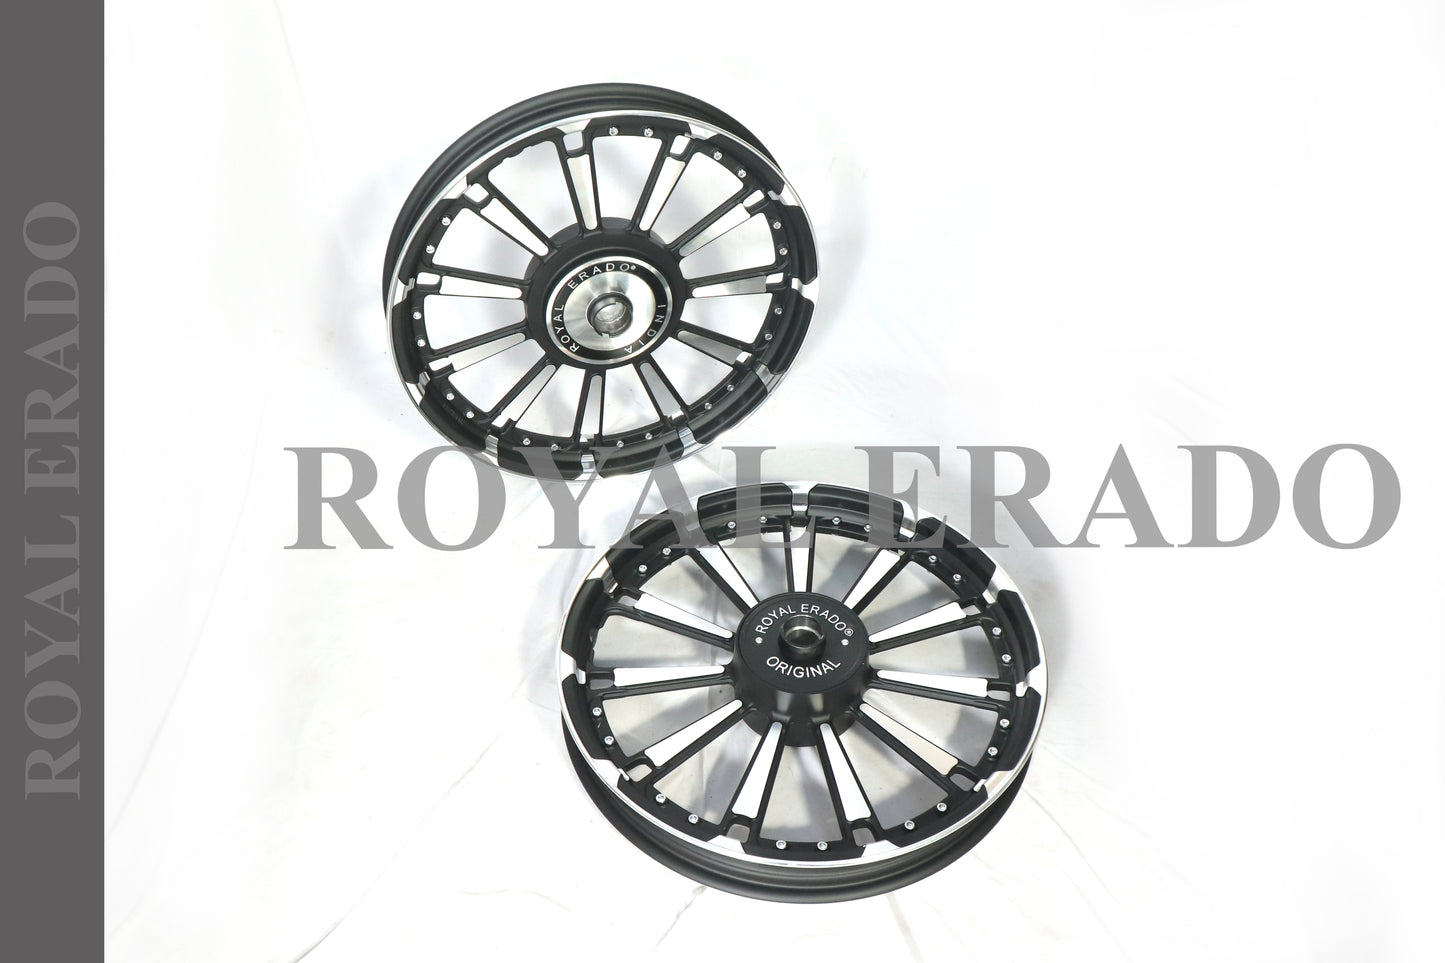 11 SPOKES RAJPUTANA DESIGN Alloy Wheel for STANDARD ABS Royal-Enfield Bullet X 350CC, Electra, Thunderbird 2010 model